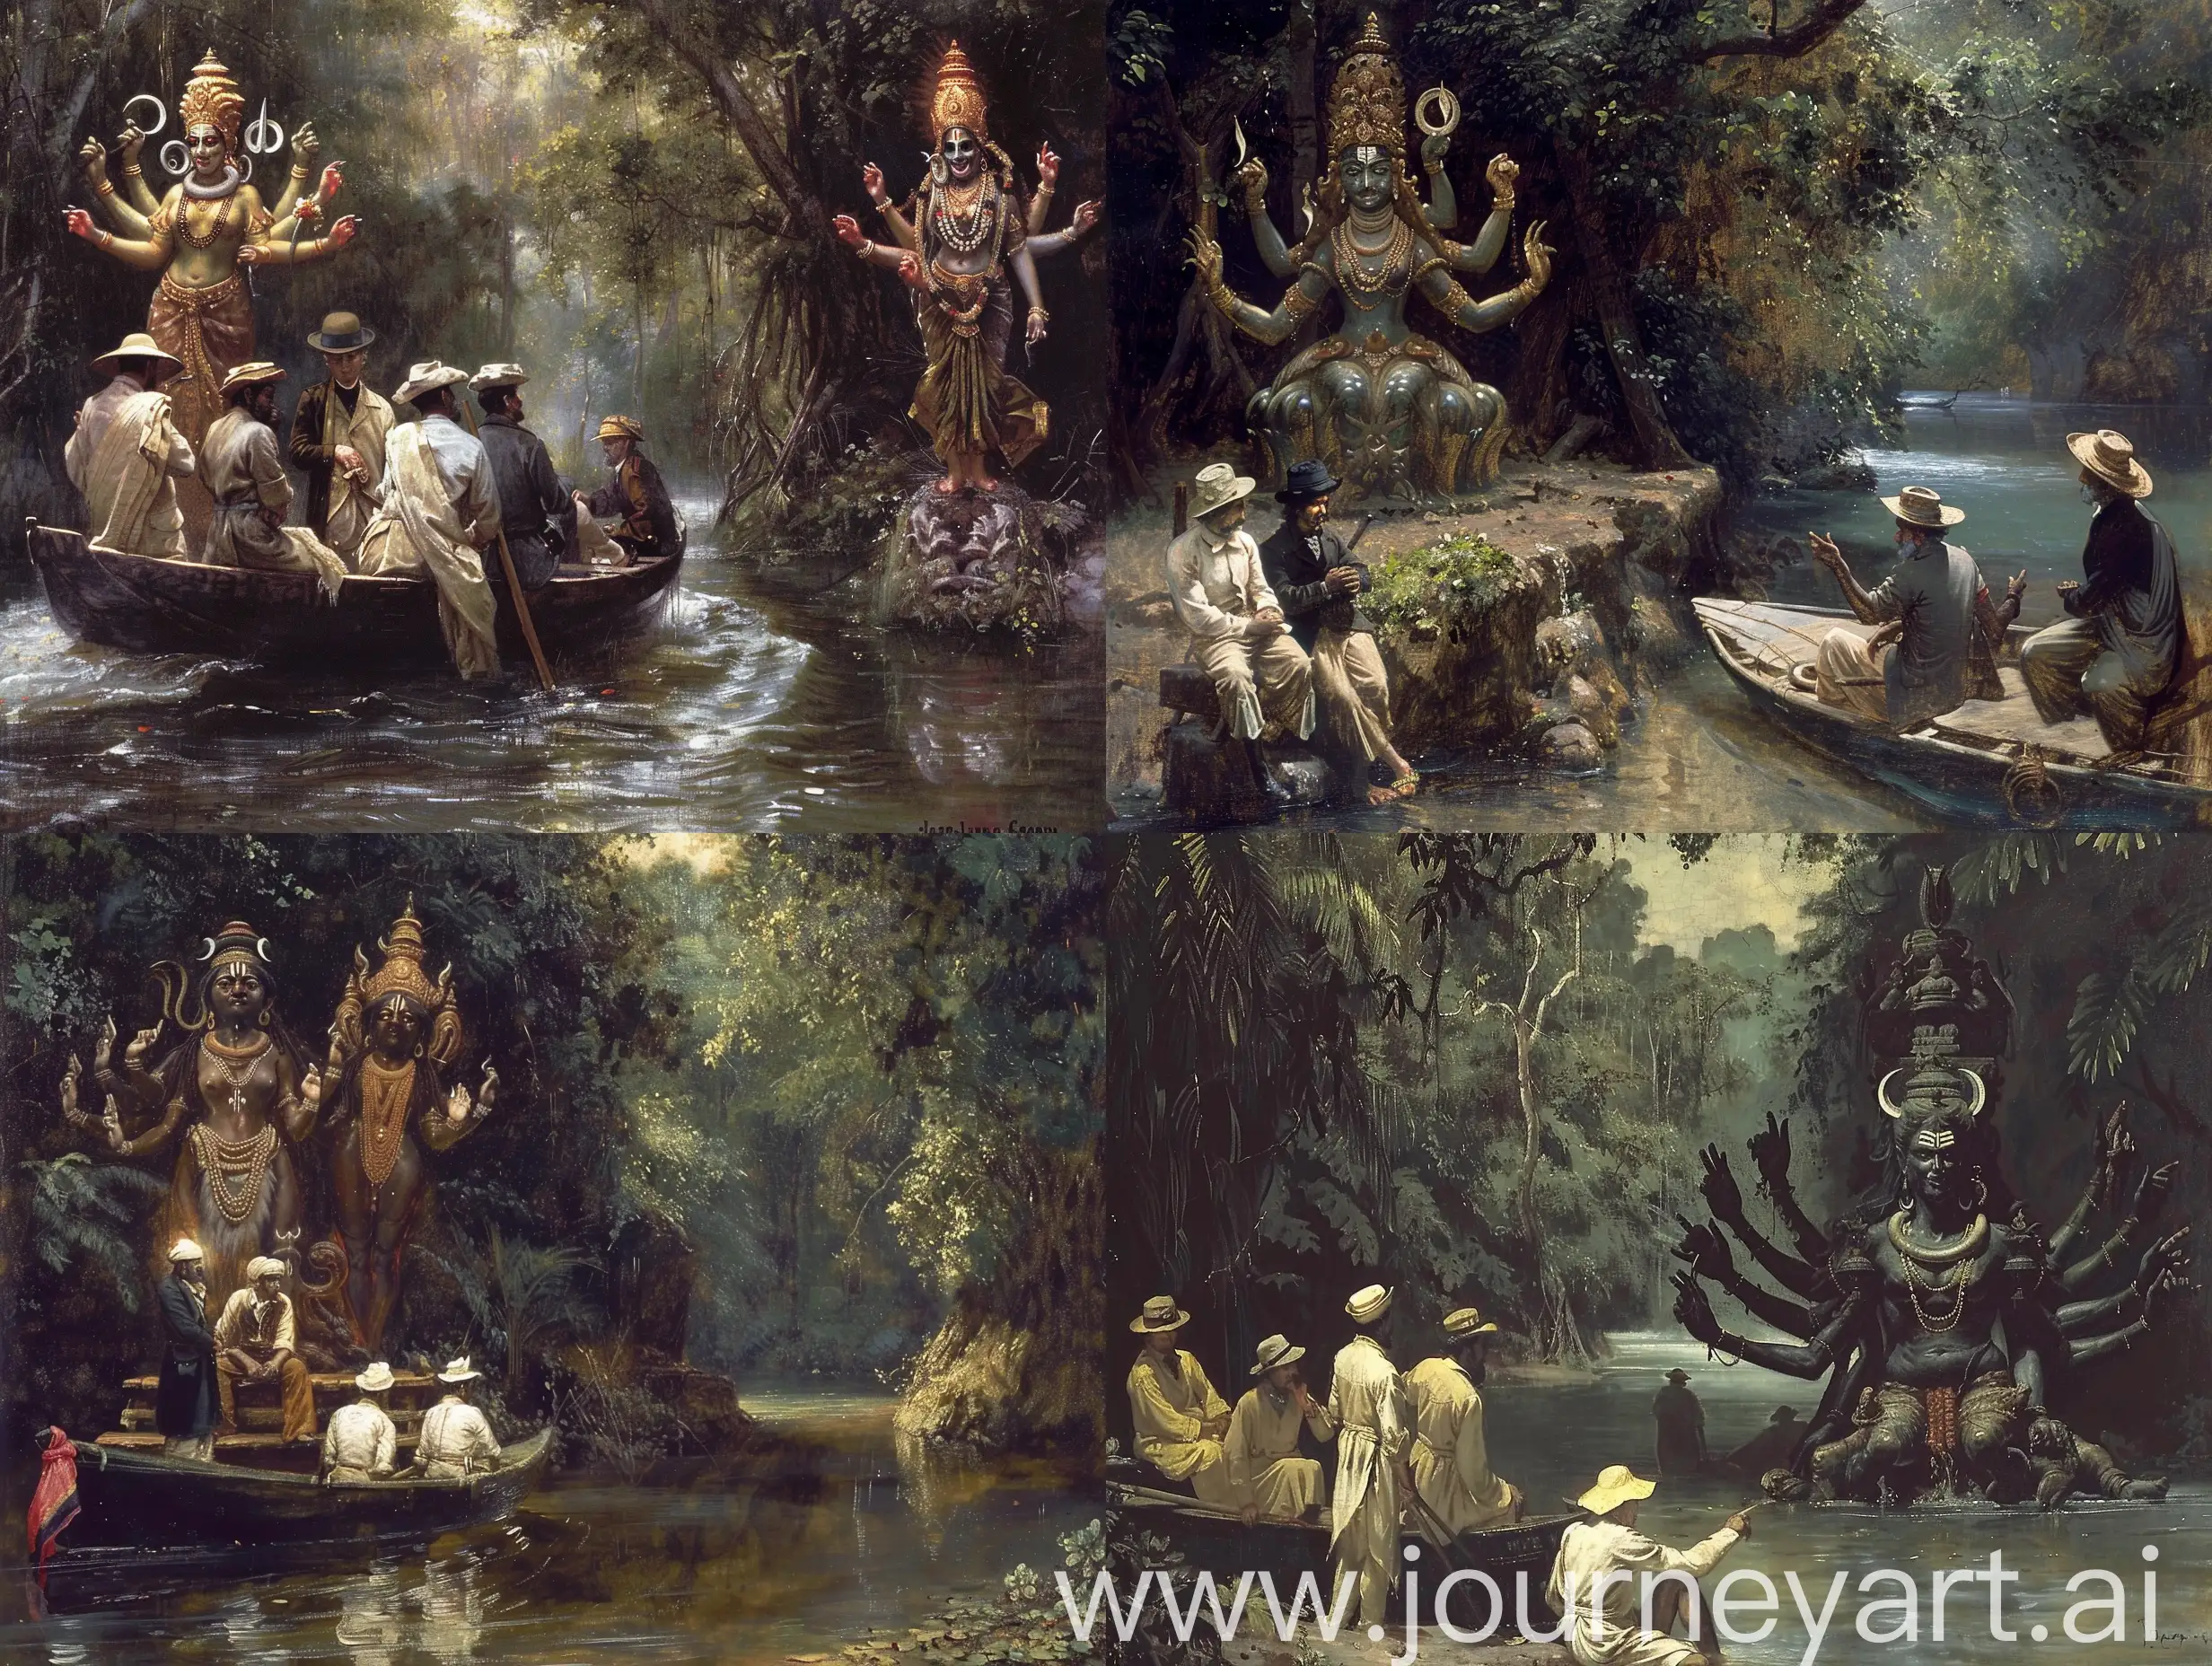 British-Adventurers-Discover-Mystical-Hindu-Shrine-in-Jungle-Expedition